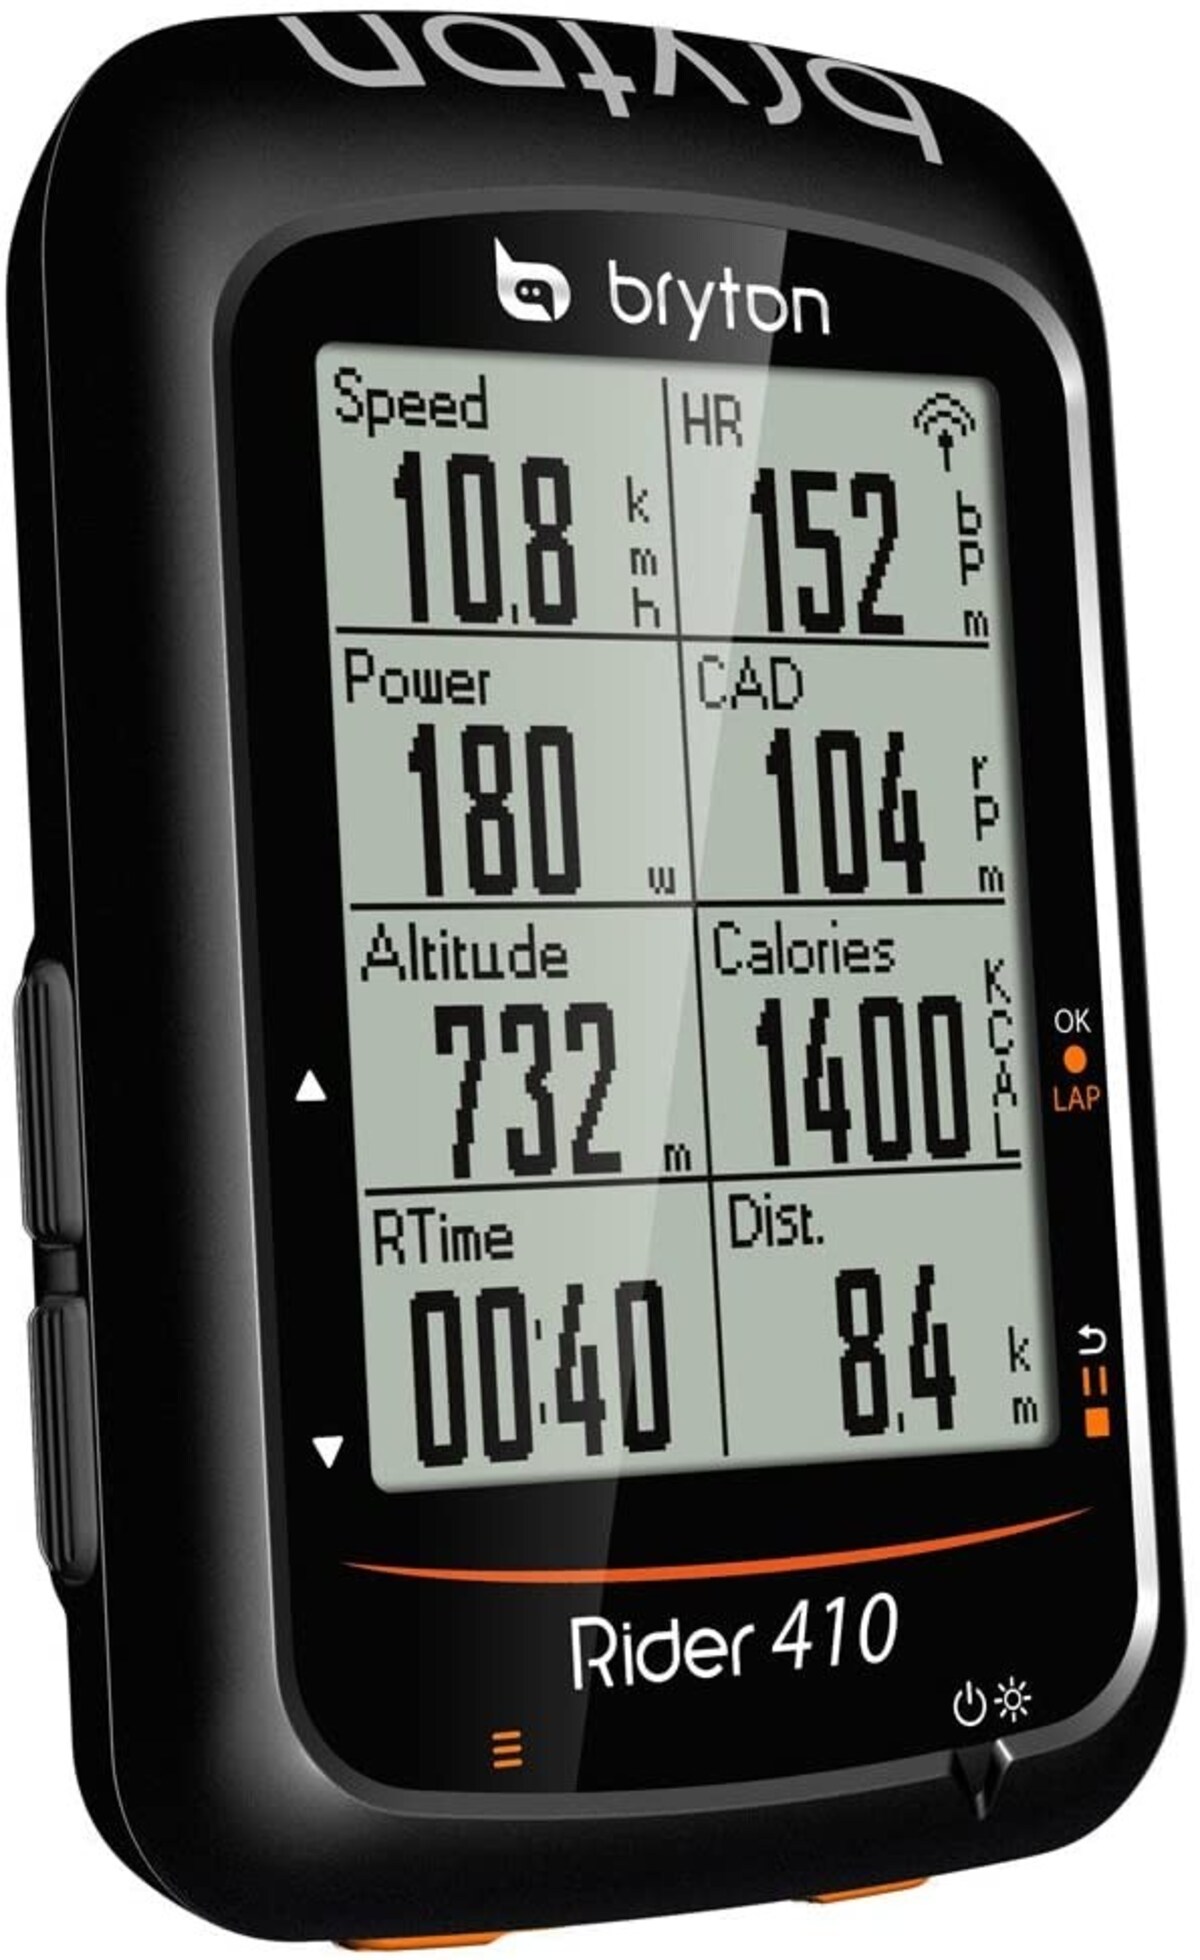  Rider410  GPSサイクルコンピューター ケイデンスセンサー付画像3 